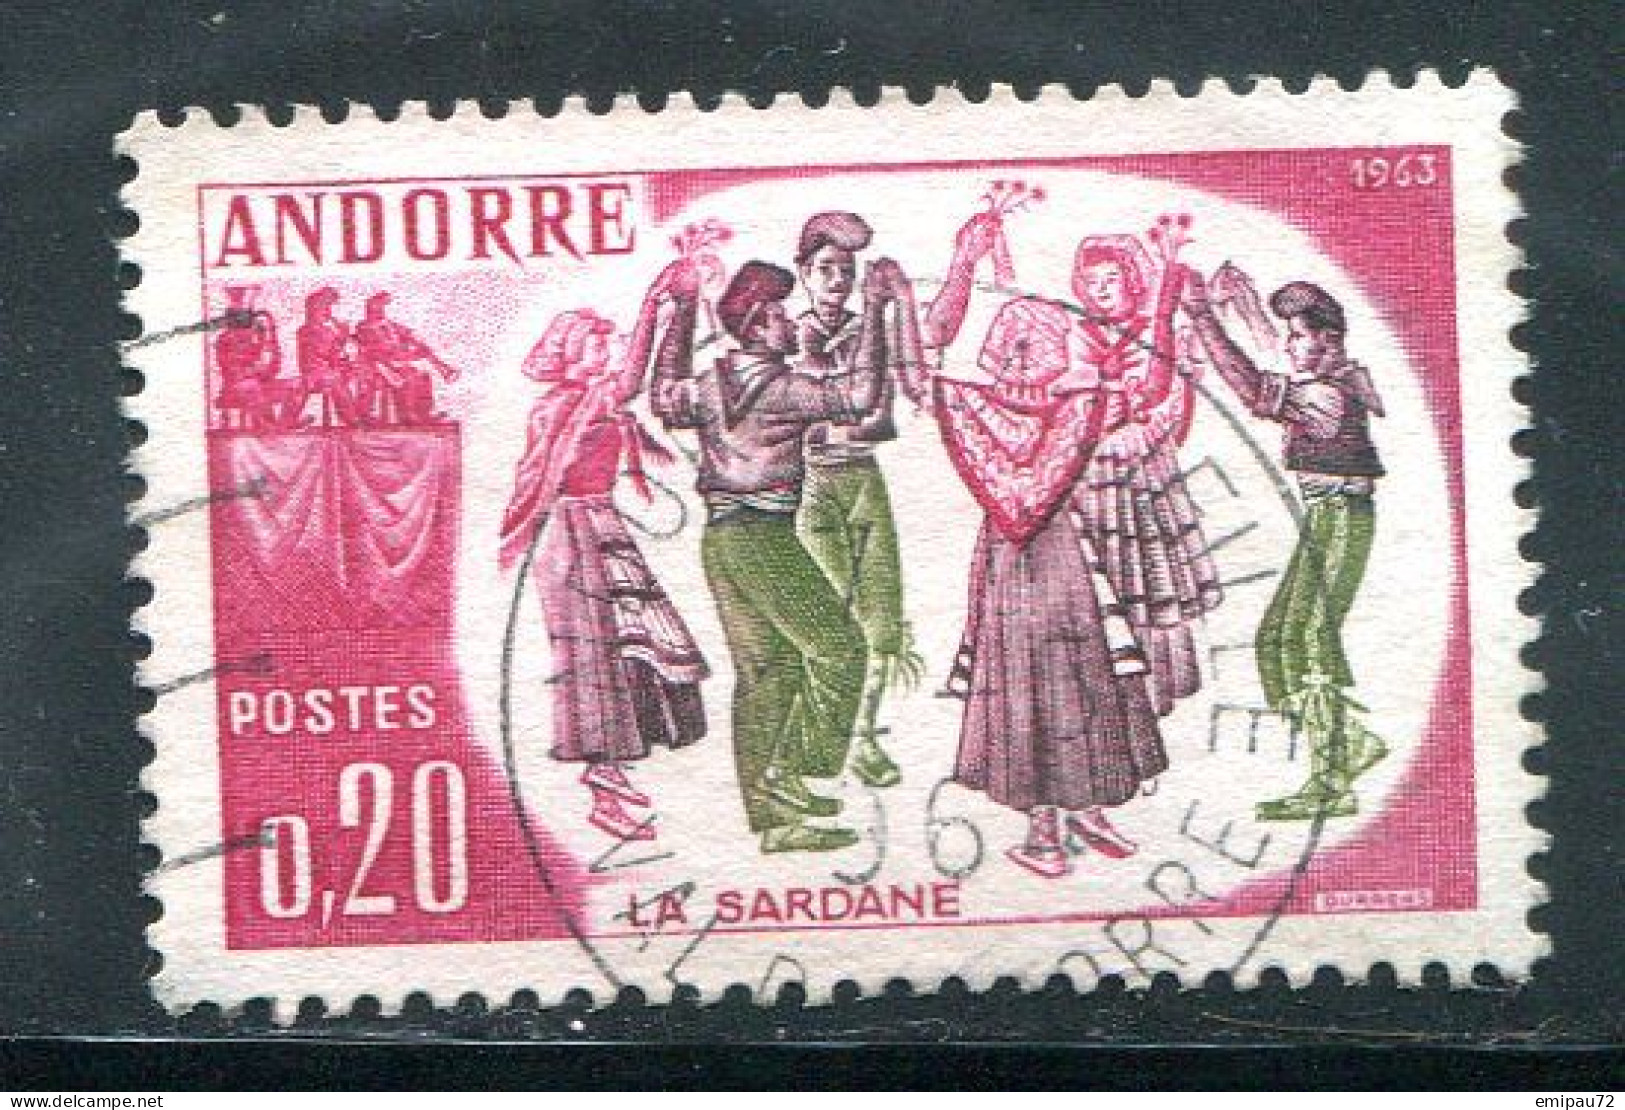 ANDORRE- Y&T N°166- Oblitéré - Used Stamps